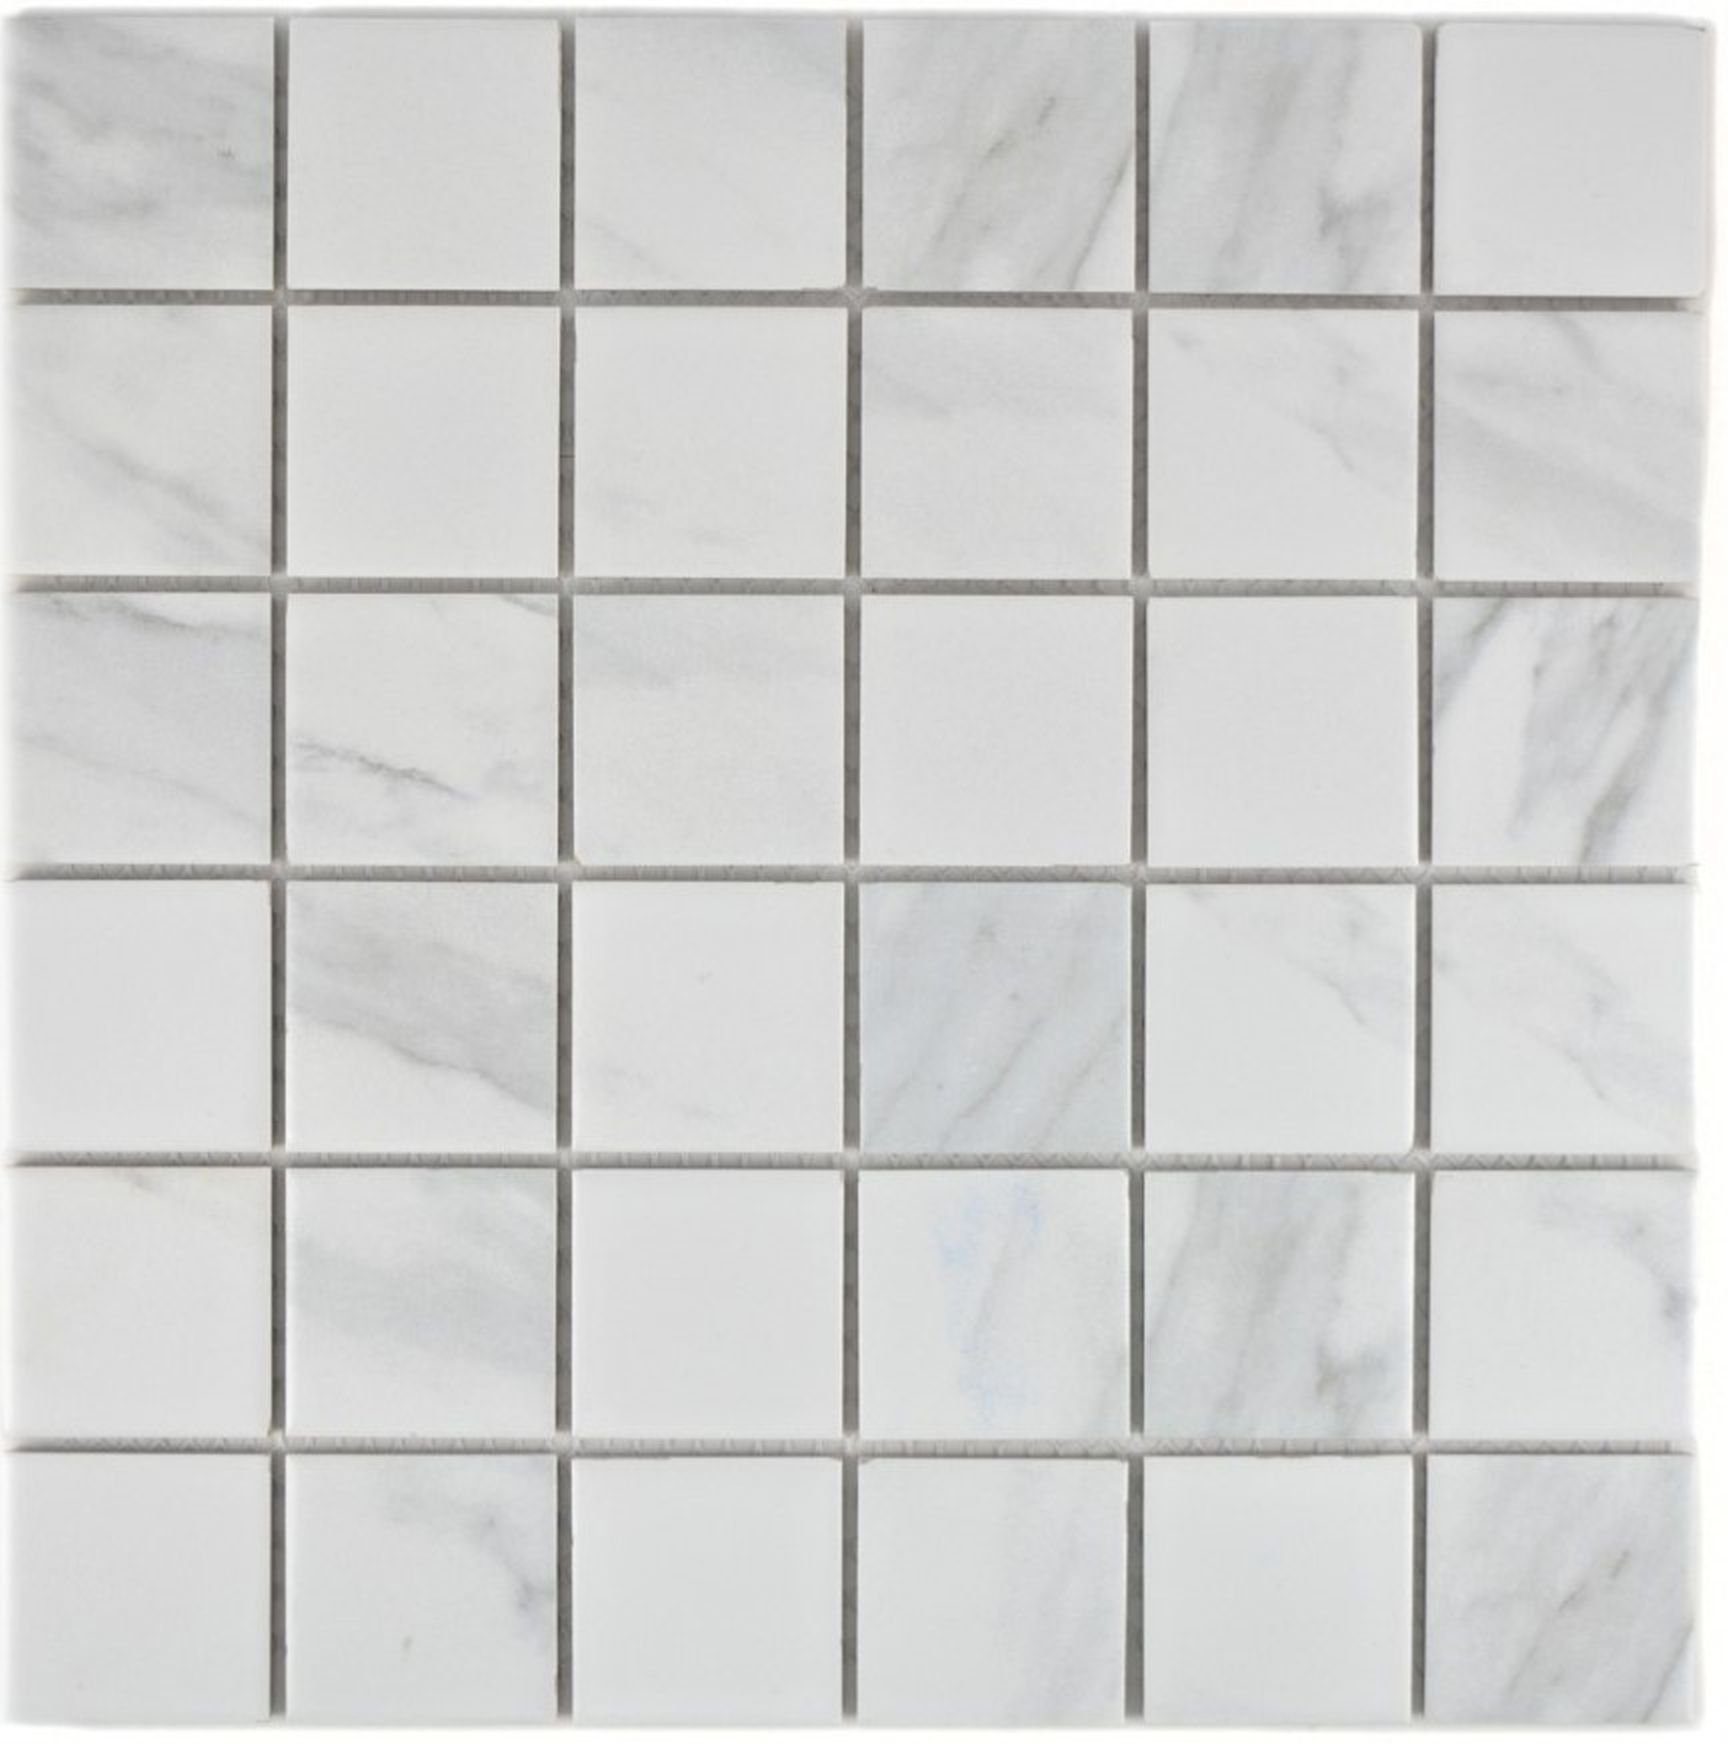 Bad Küche Fliese Mosaikfliesen grau Mosaik Mosani weiß Keramik Fliesenspiegel Carrara